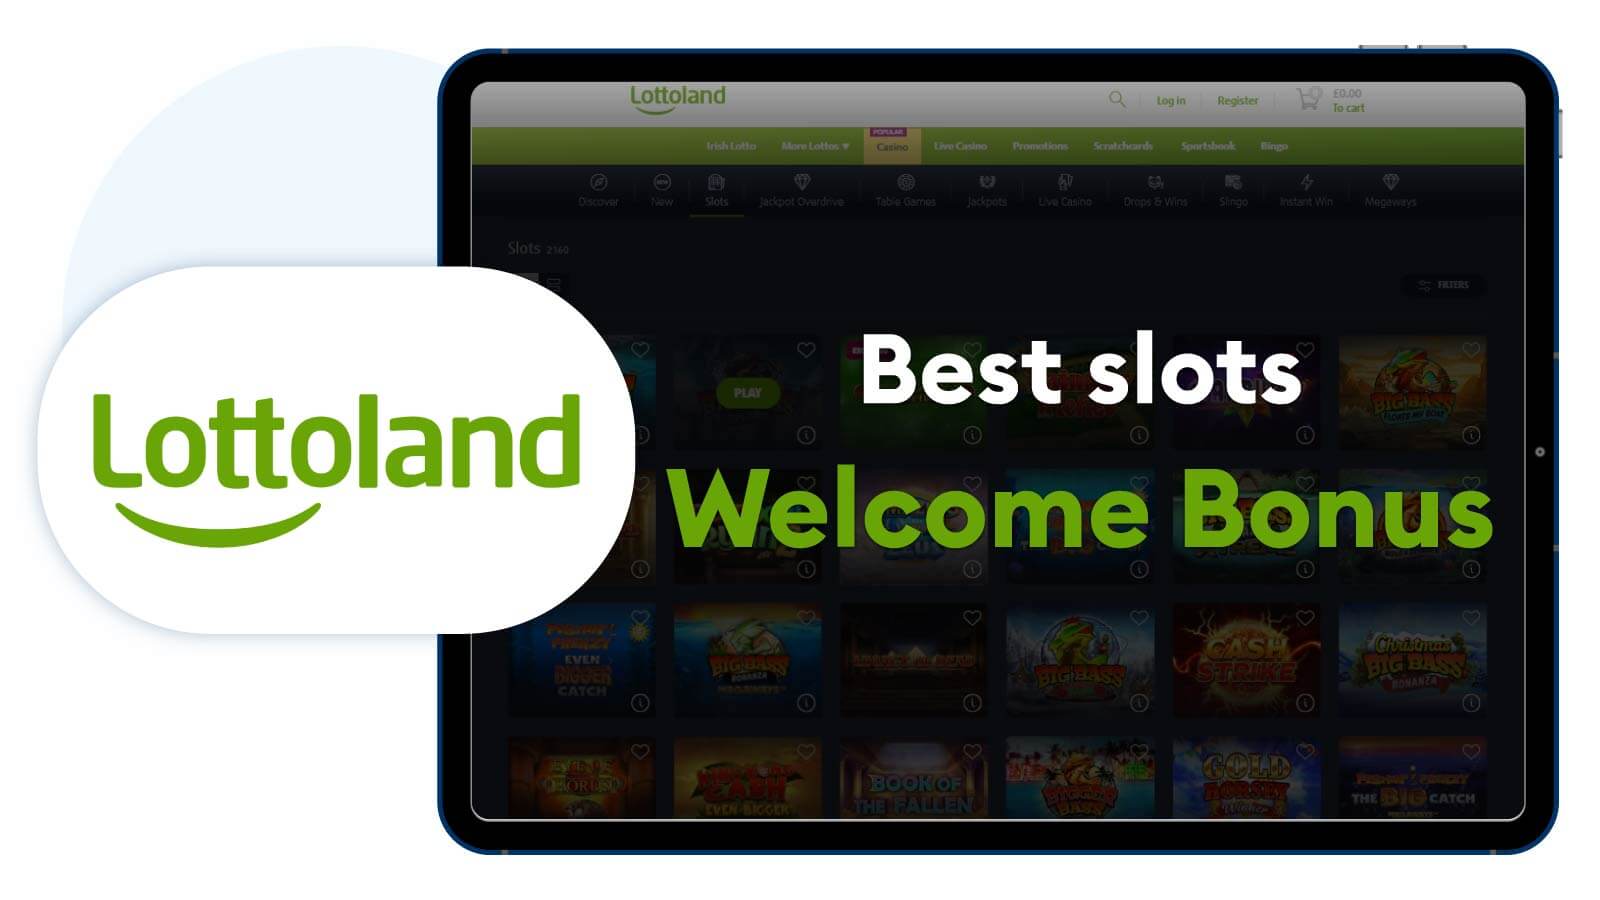 Best-slots-welcome-bonus-Lottoland-Casino